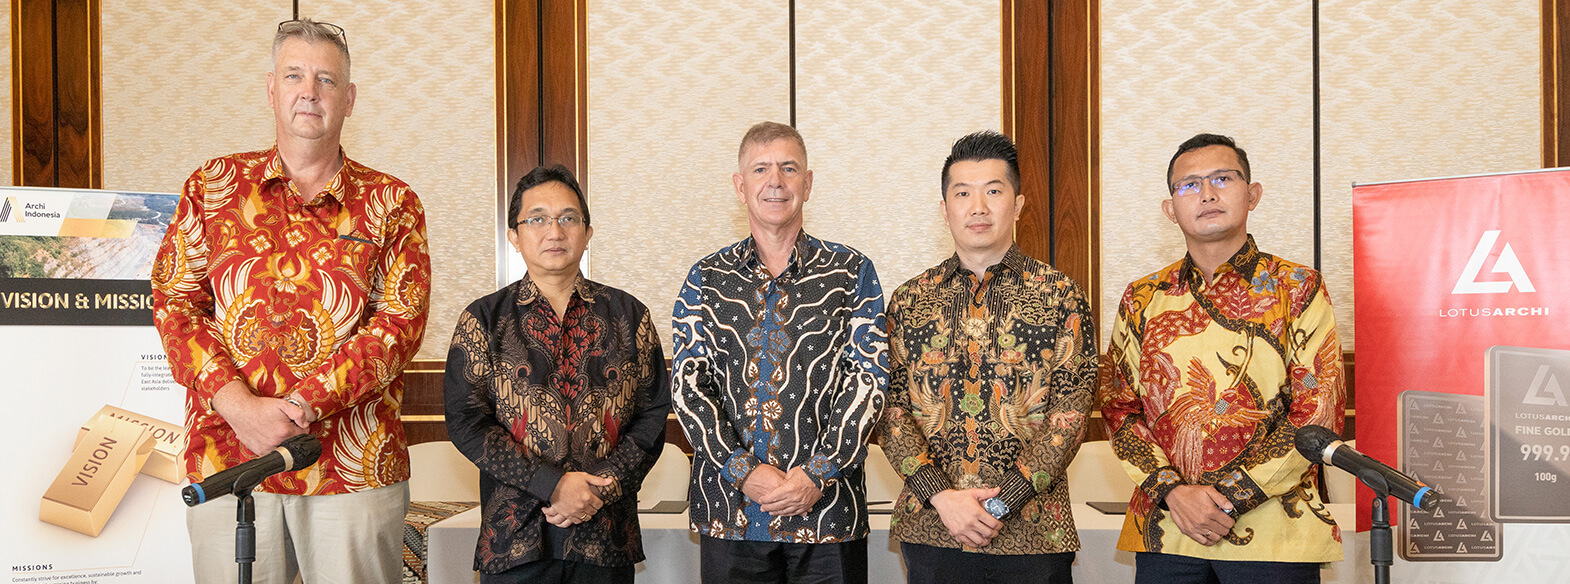 Rapat Umum Pemegang Saham Tahunan PT Archi Indonesia Tbk